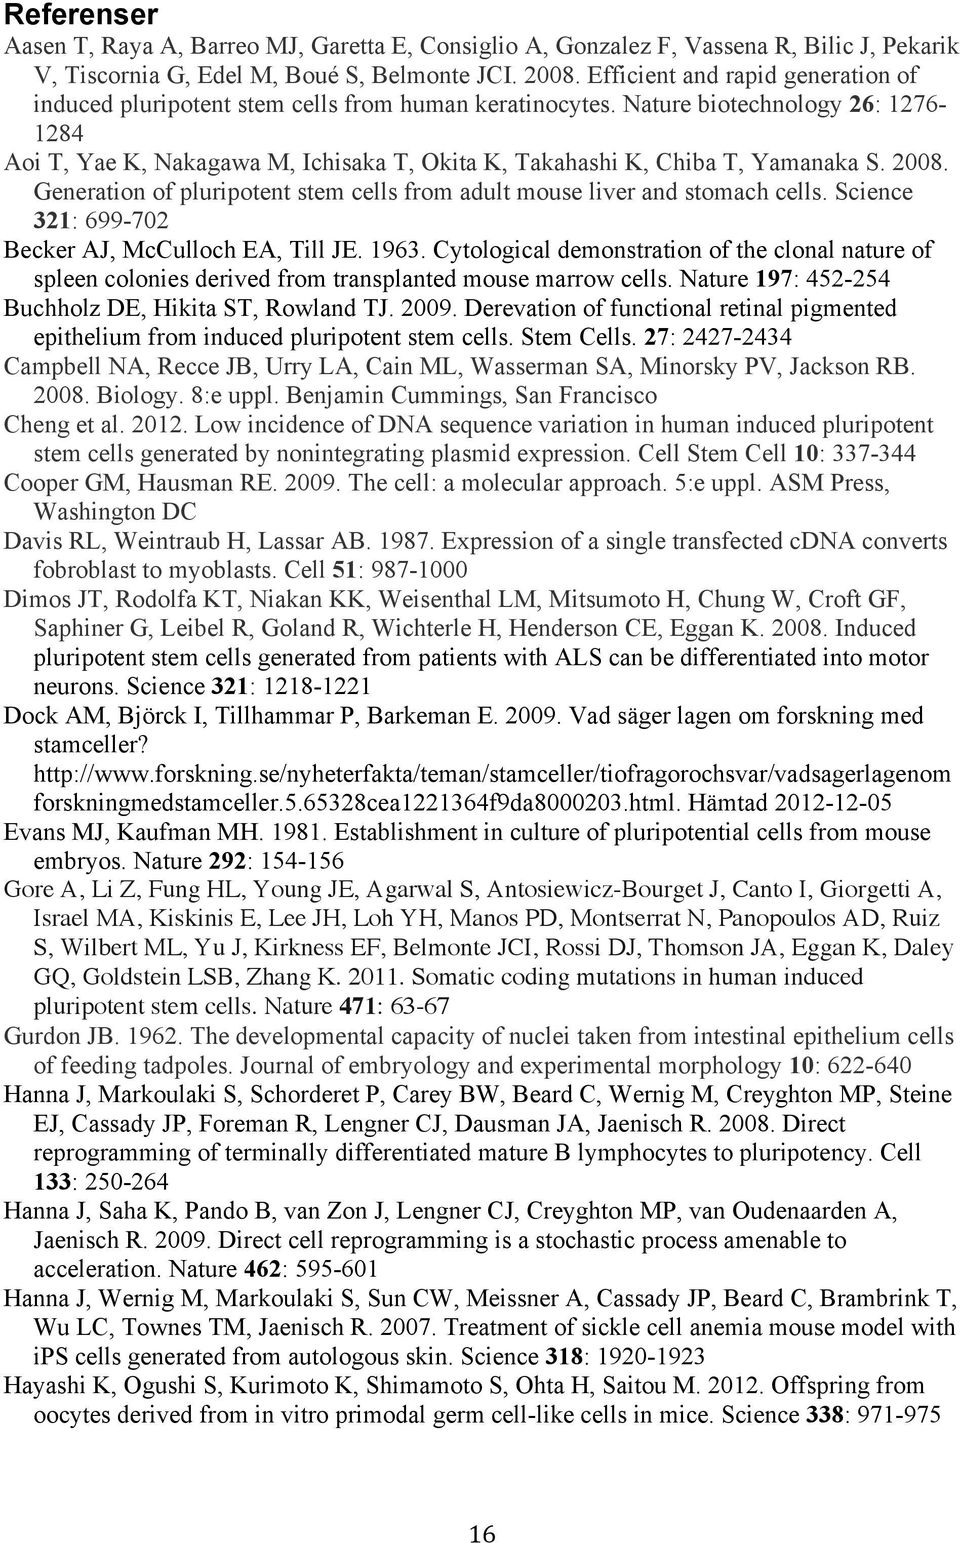 Nature biotechnology 26: 1276-1284 Aoi T, Yae K, Nakagawa M, Ichisaka T, Okita K, Takahashi K, Chiba T, Yamanaka S. 2008. Generation of pluripotent stem cells from adult mouse liver and stomach cells.